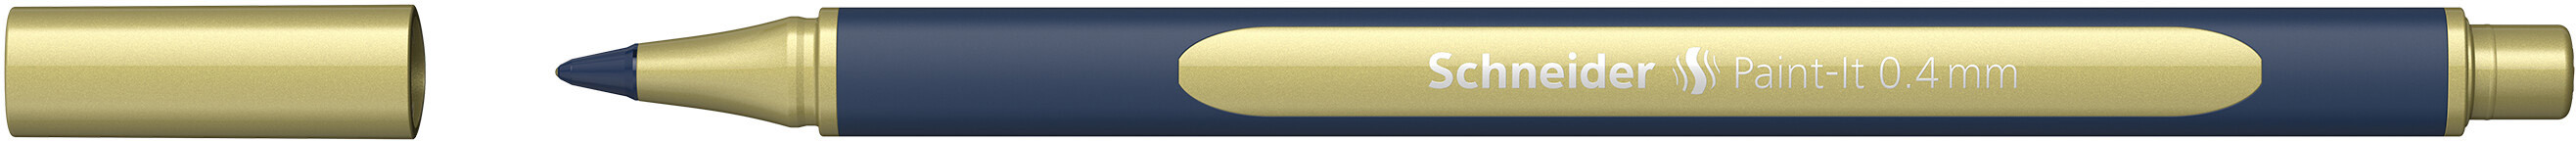 SCHNEIDER Roller Paint-it ML050011066 gold metallic